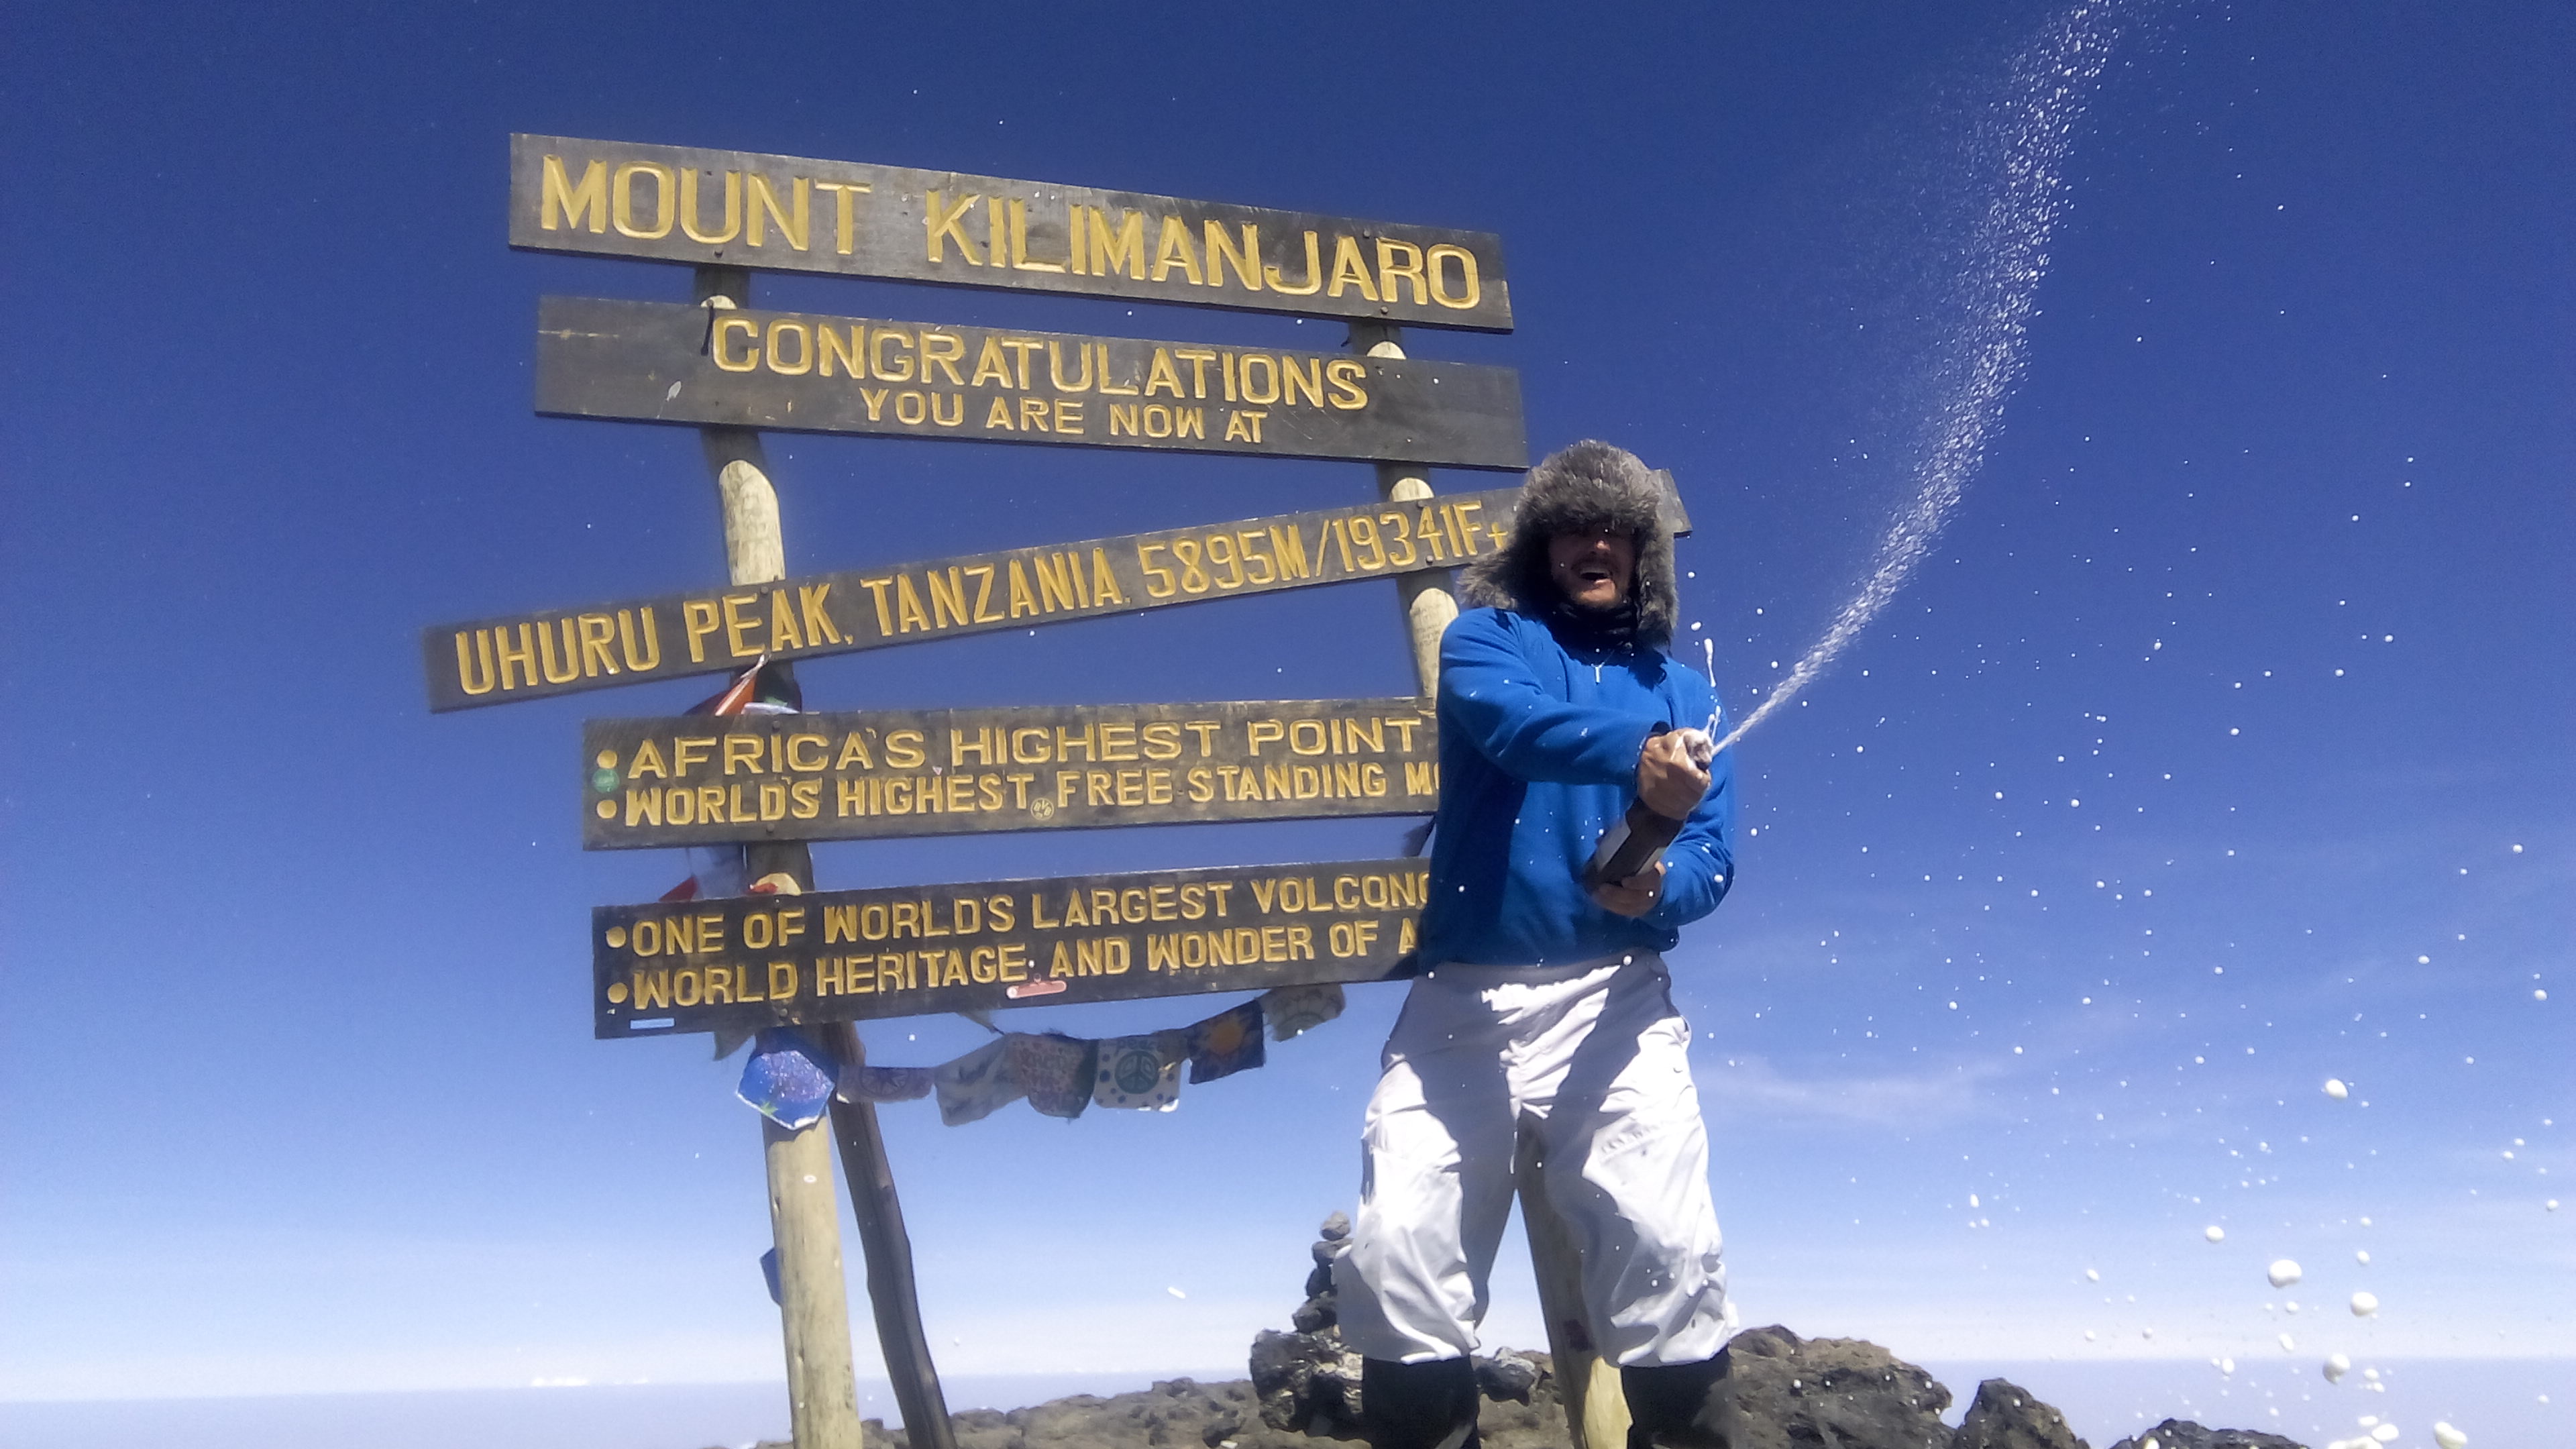 Mount Kilimanjaro is Africa’s tallest peak standing